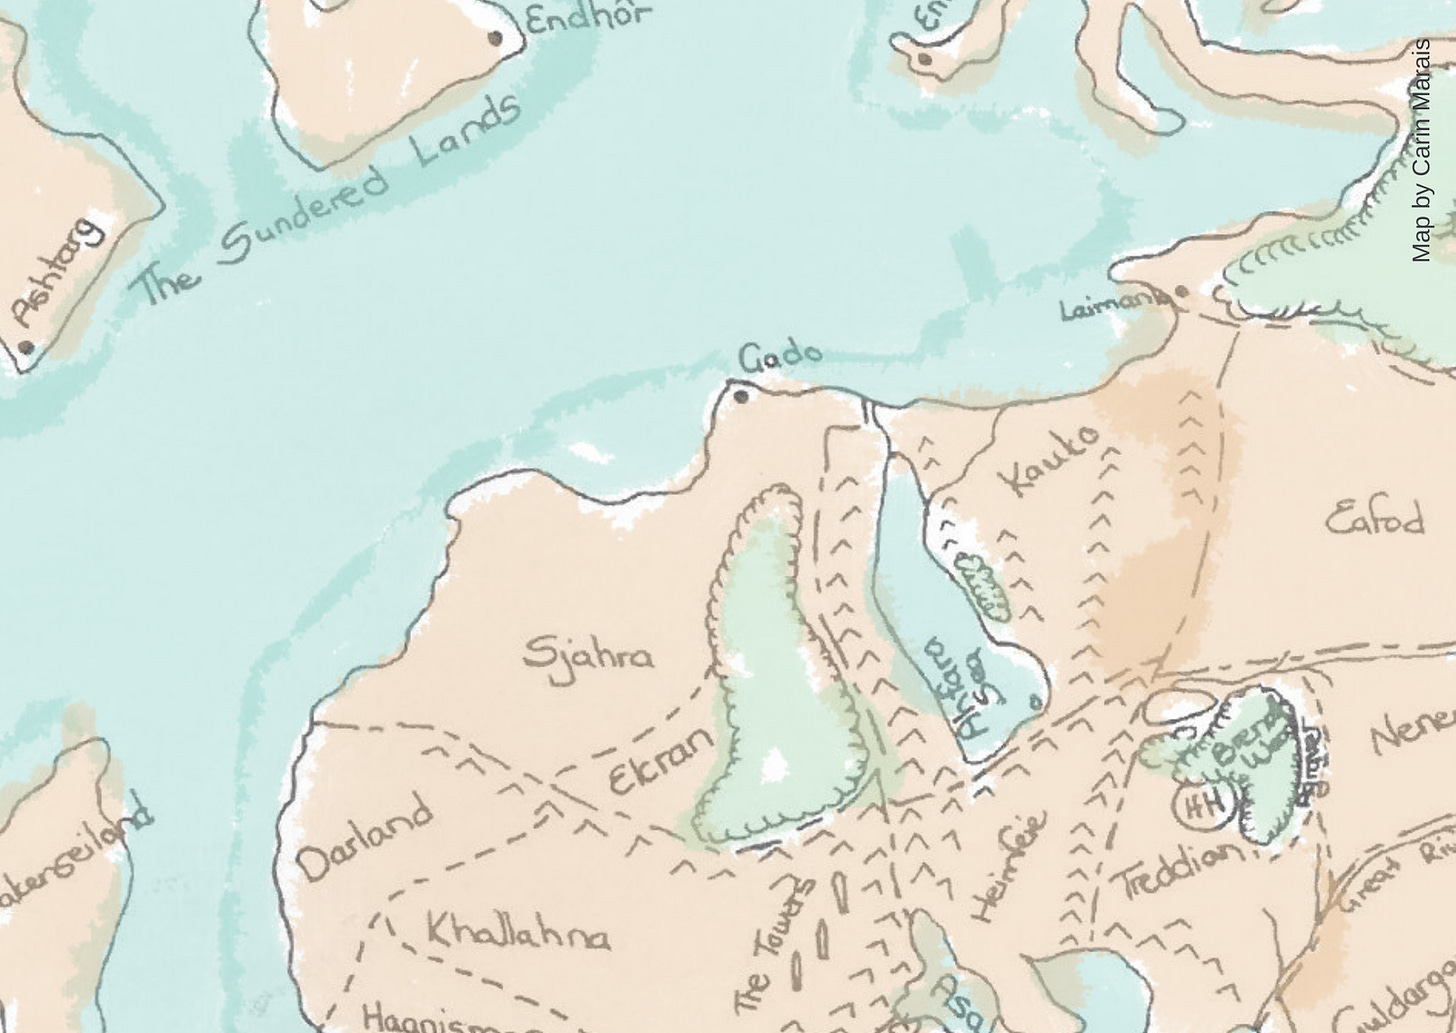 Map showing a part of Airtha-Eyrassa